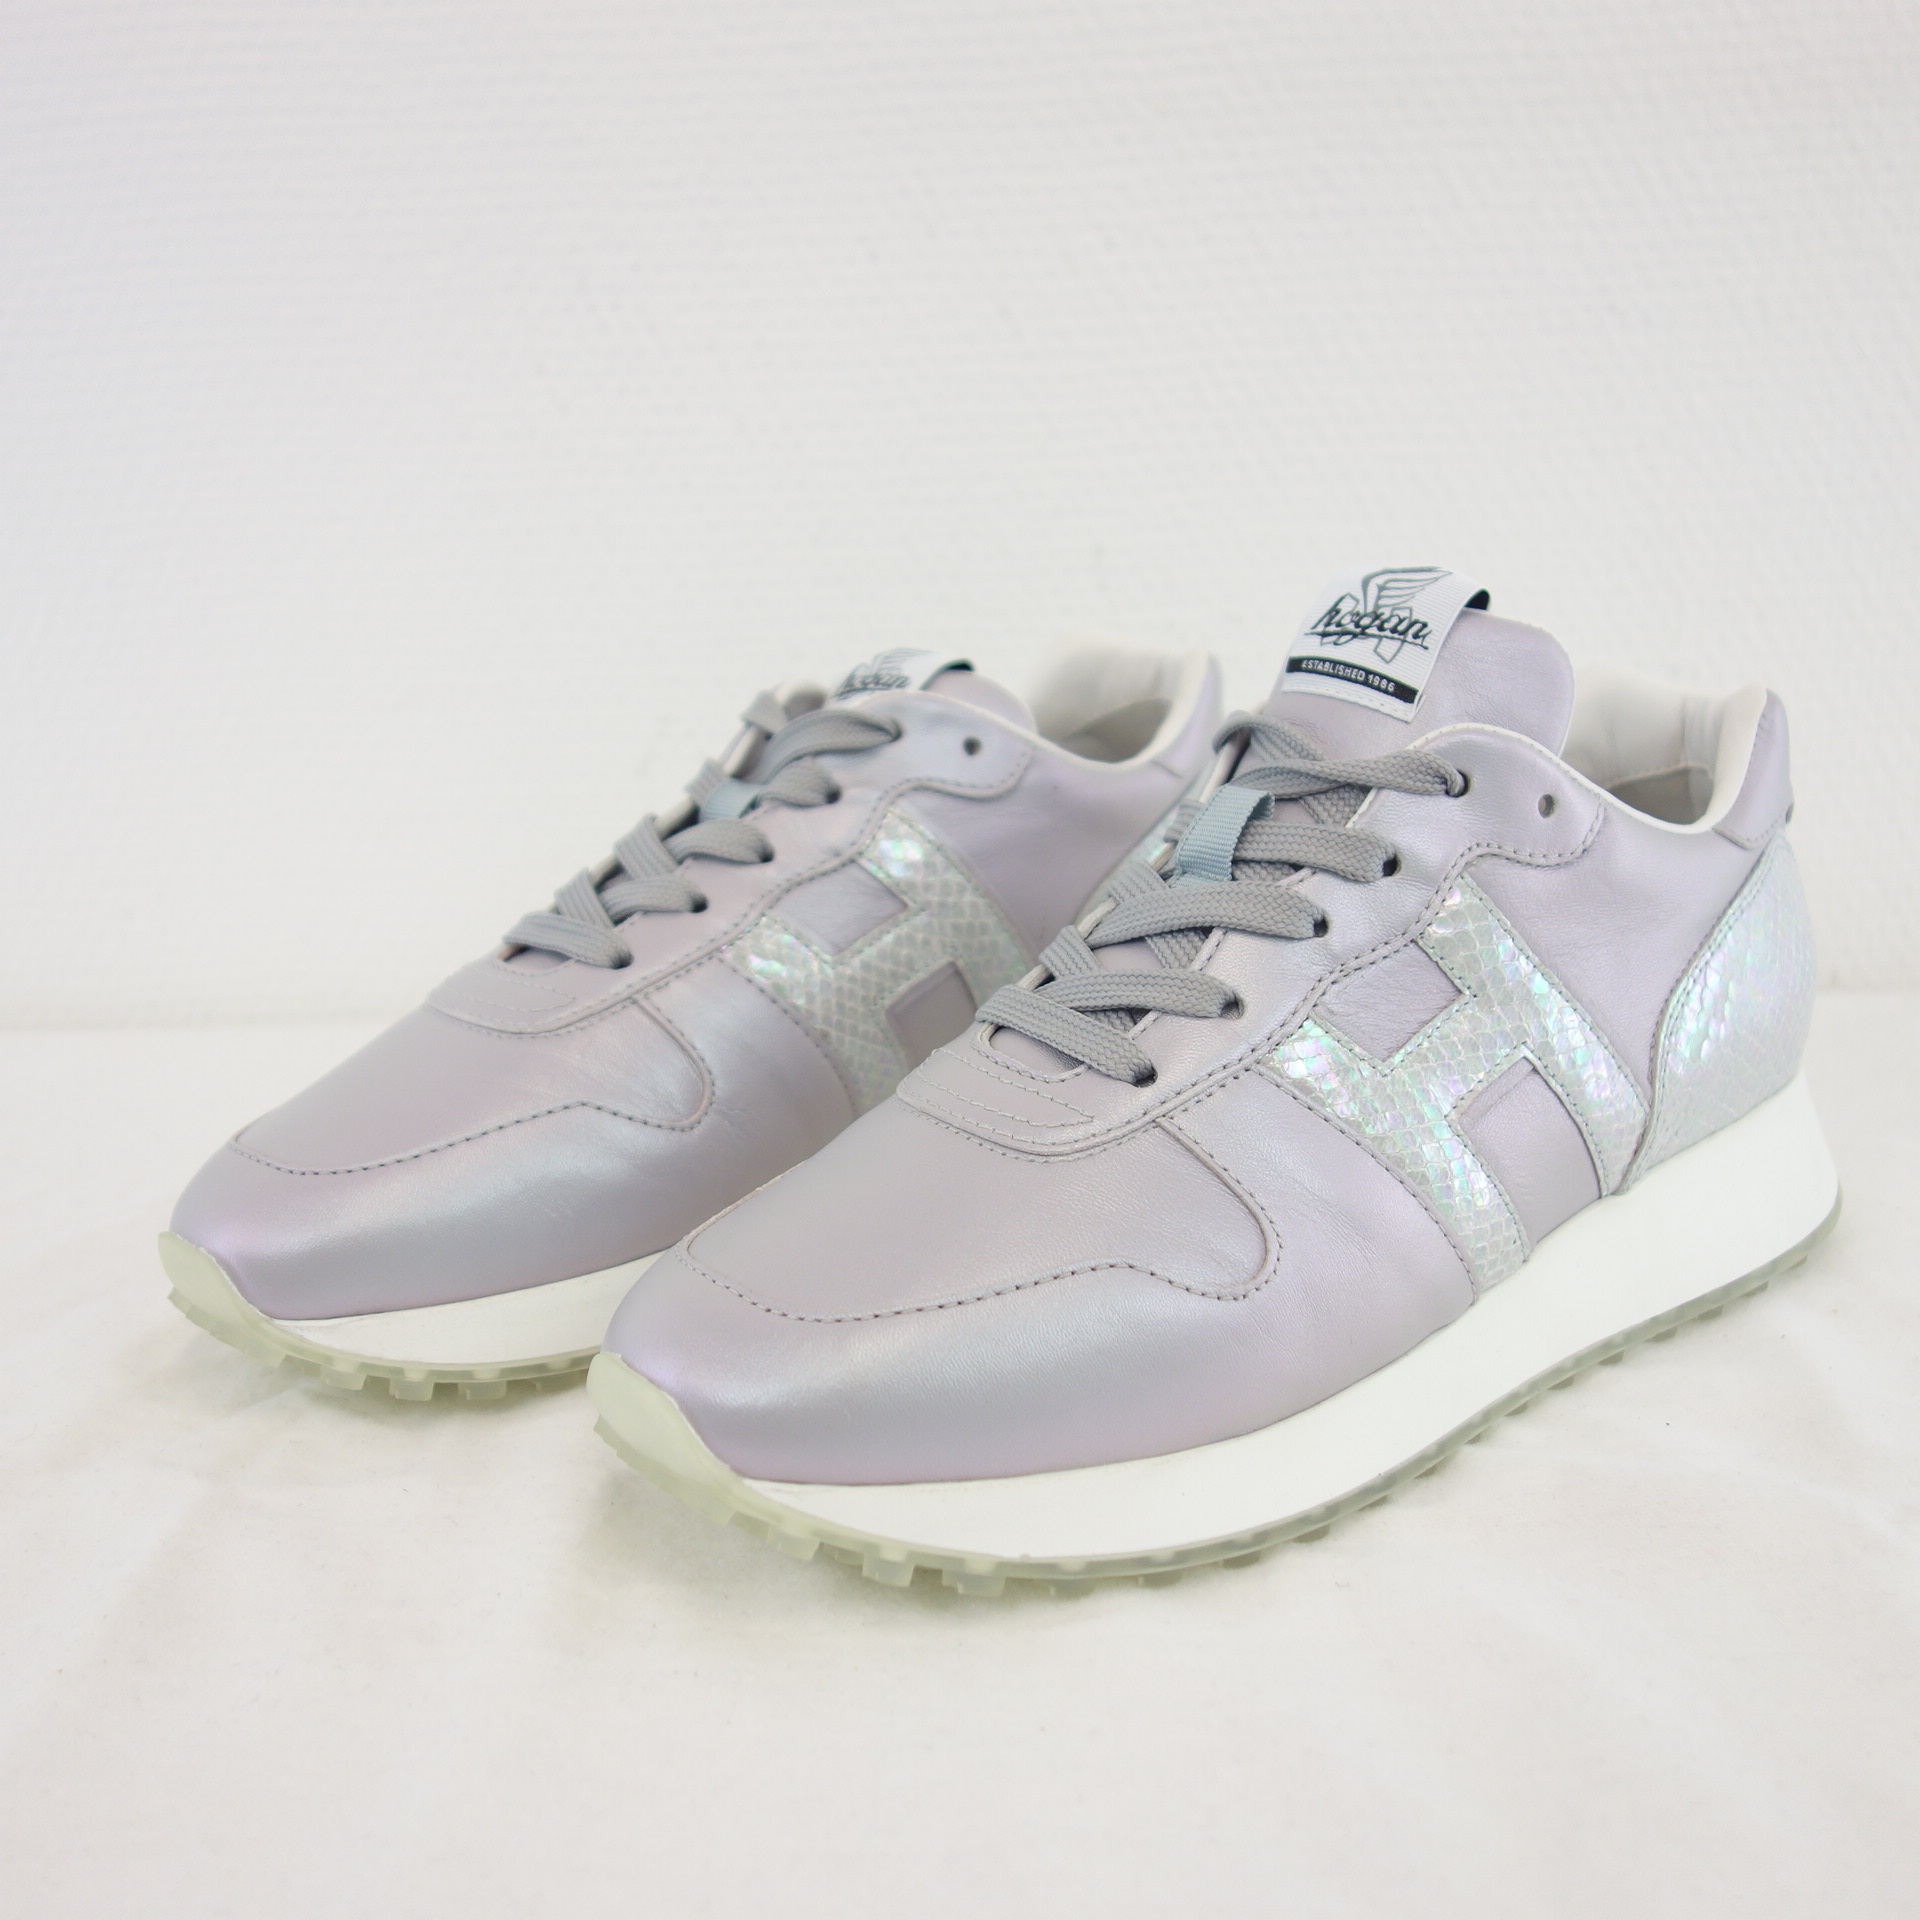 HOGAN Damen Schuhe Sportschuhe Sneaker Leder Metallic Grau Lavendel Modell H86RUN